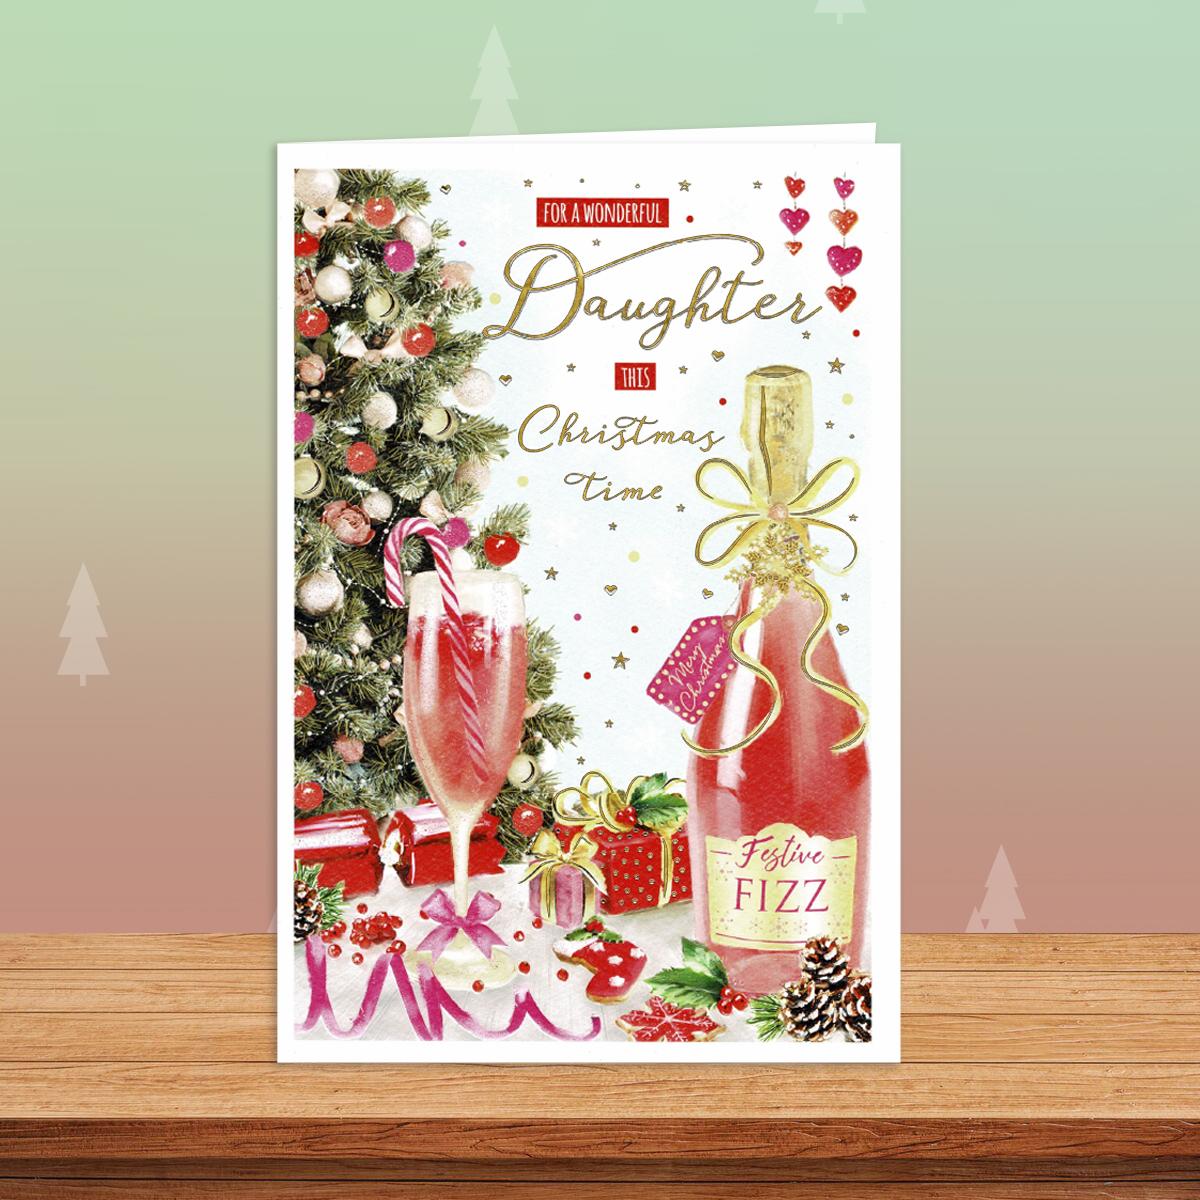 Daughter Christmas Card Alongside Its Red Envelope